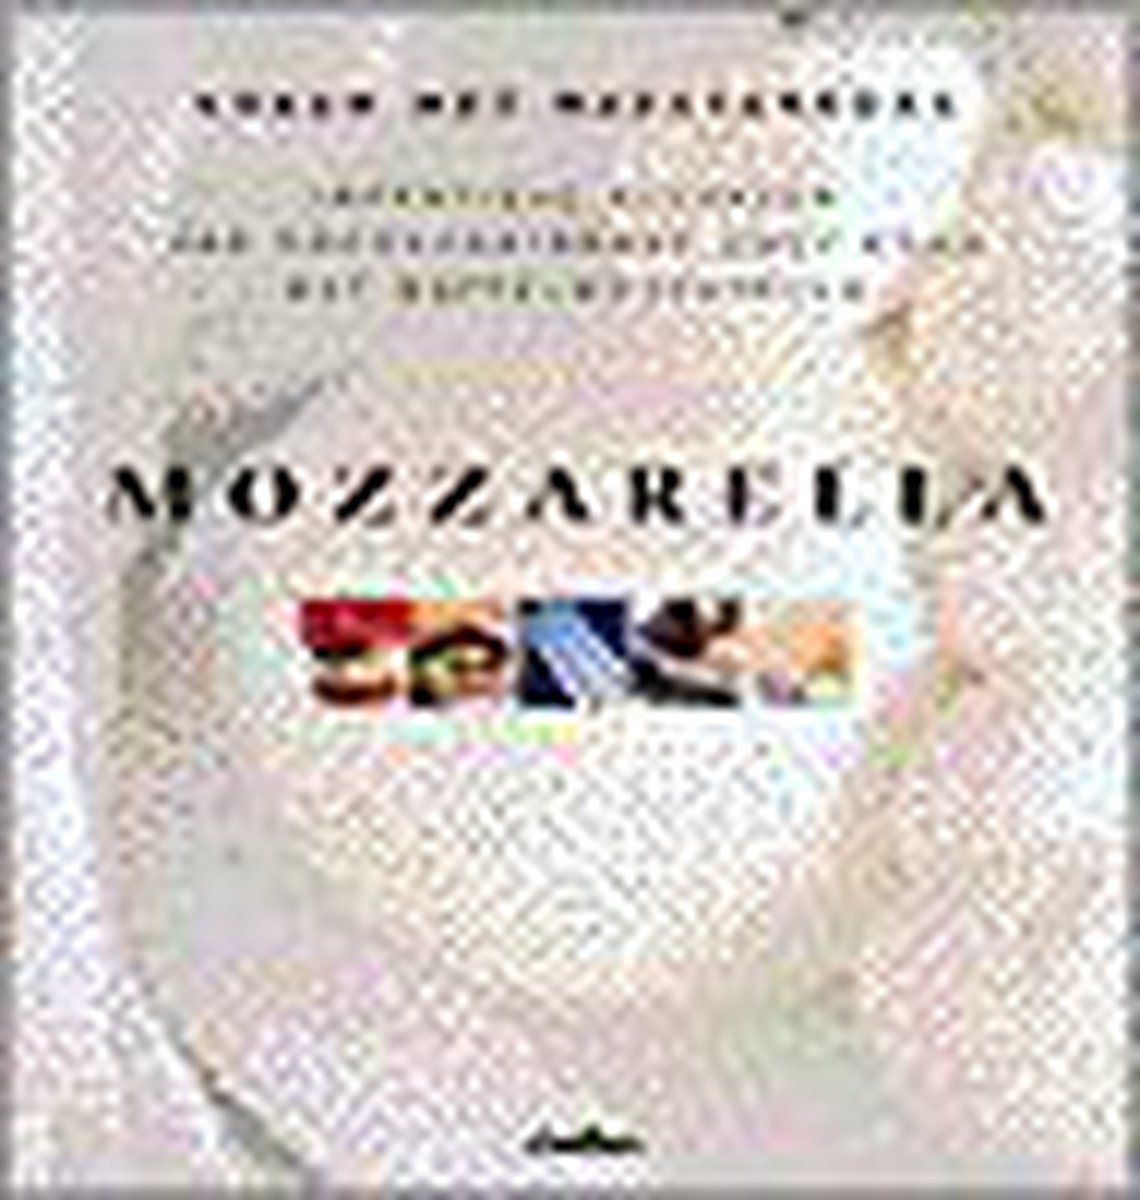 Mozzarella / Koken met meesterkoks